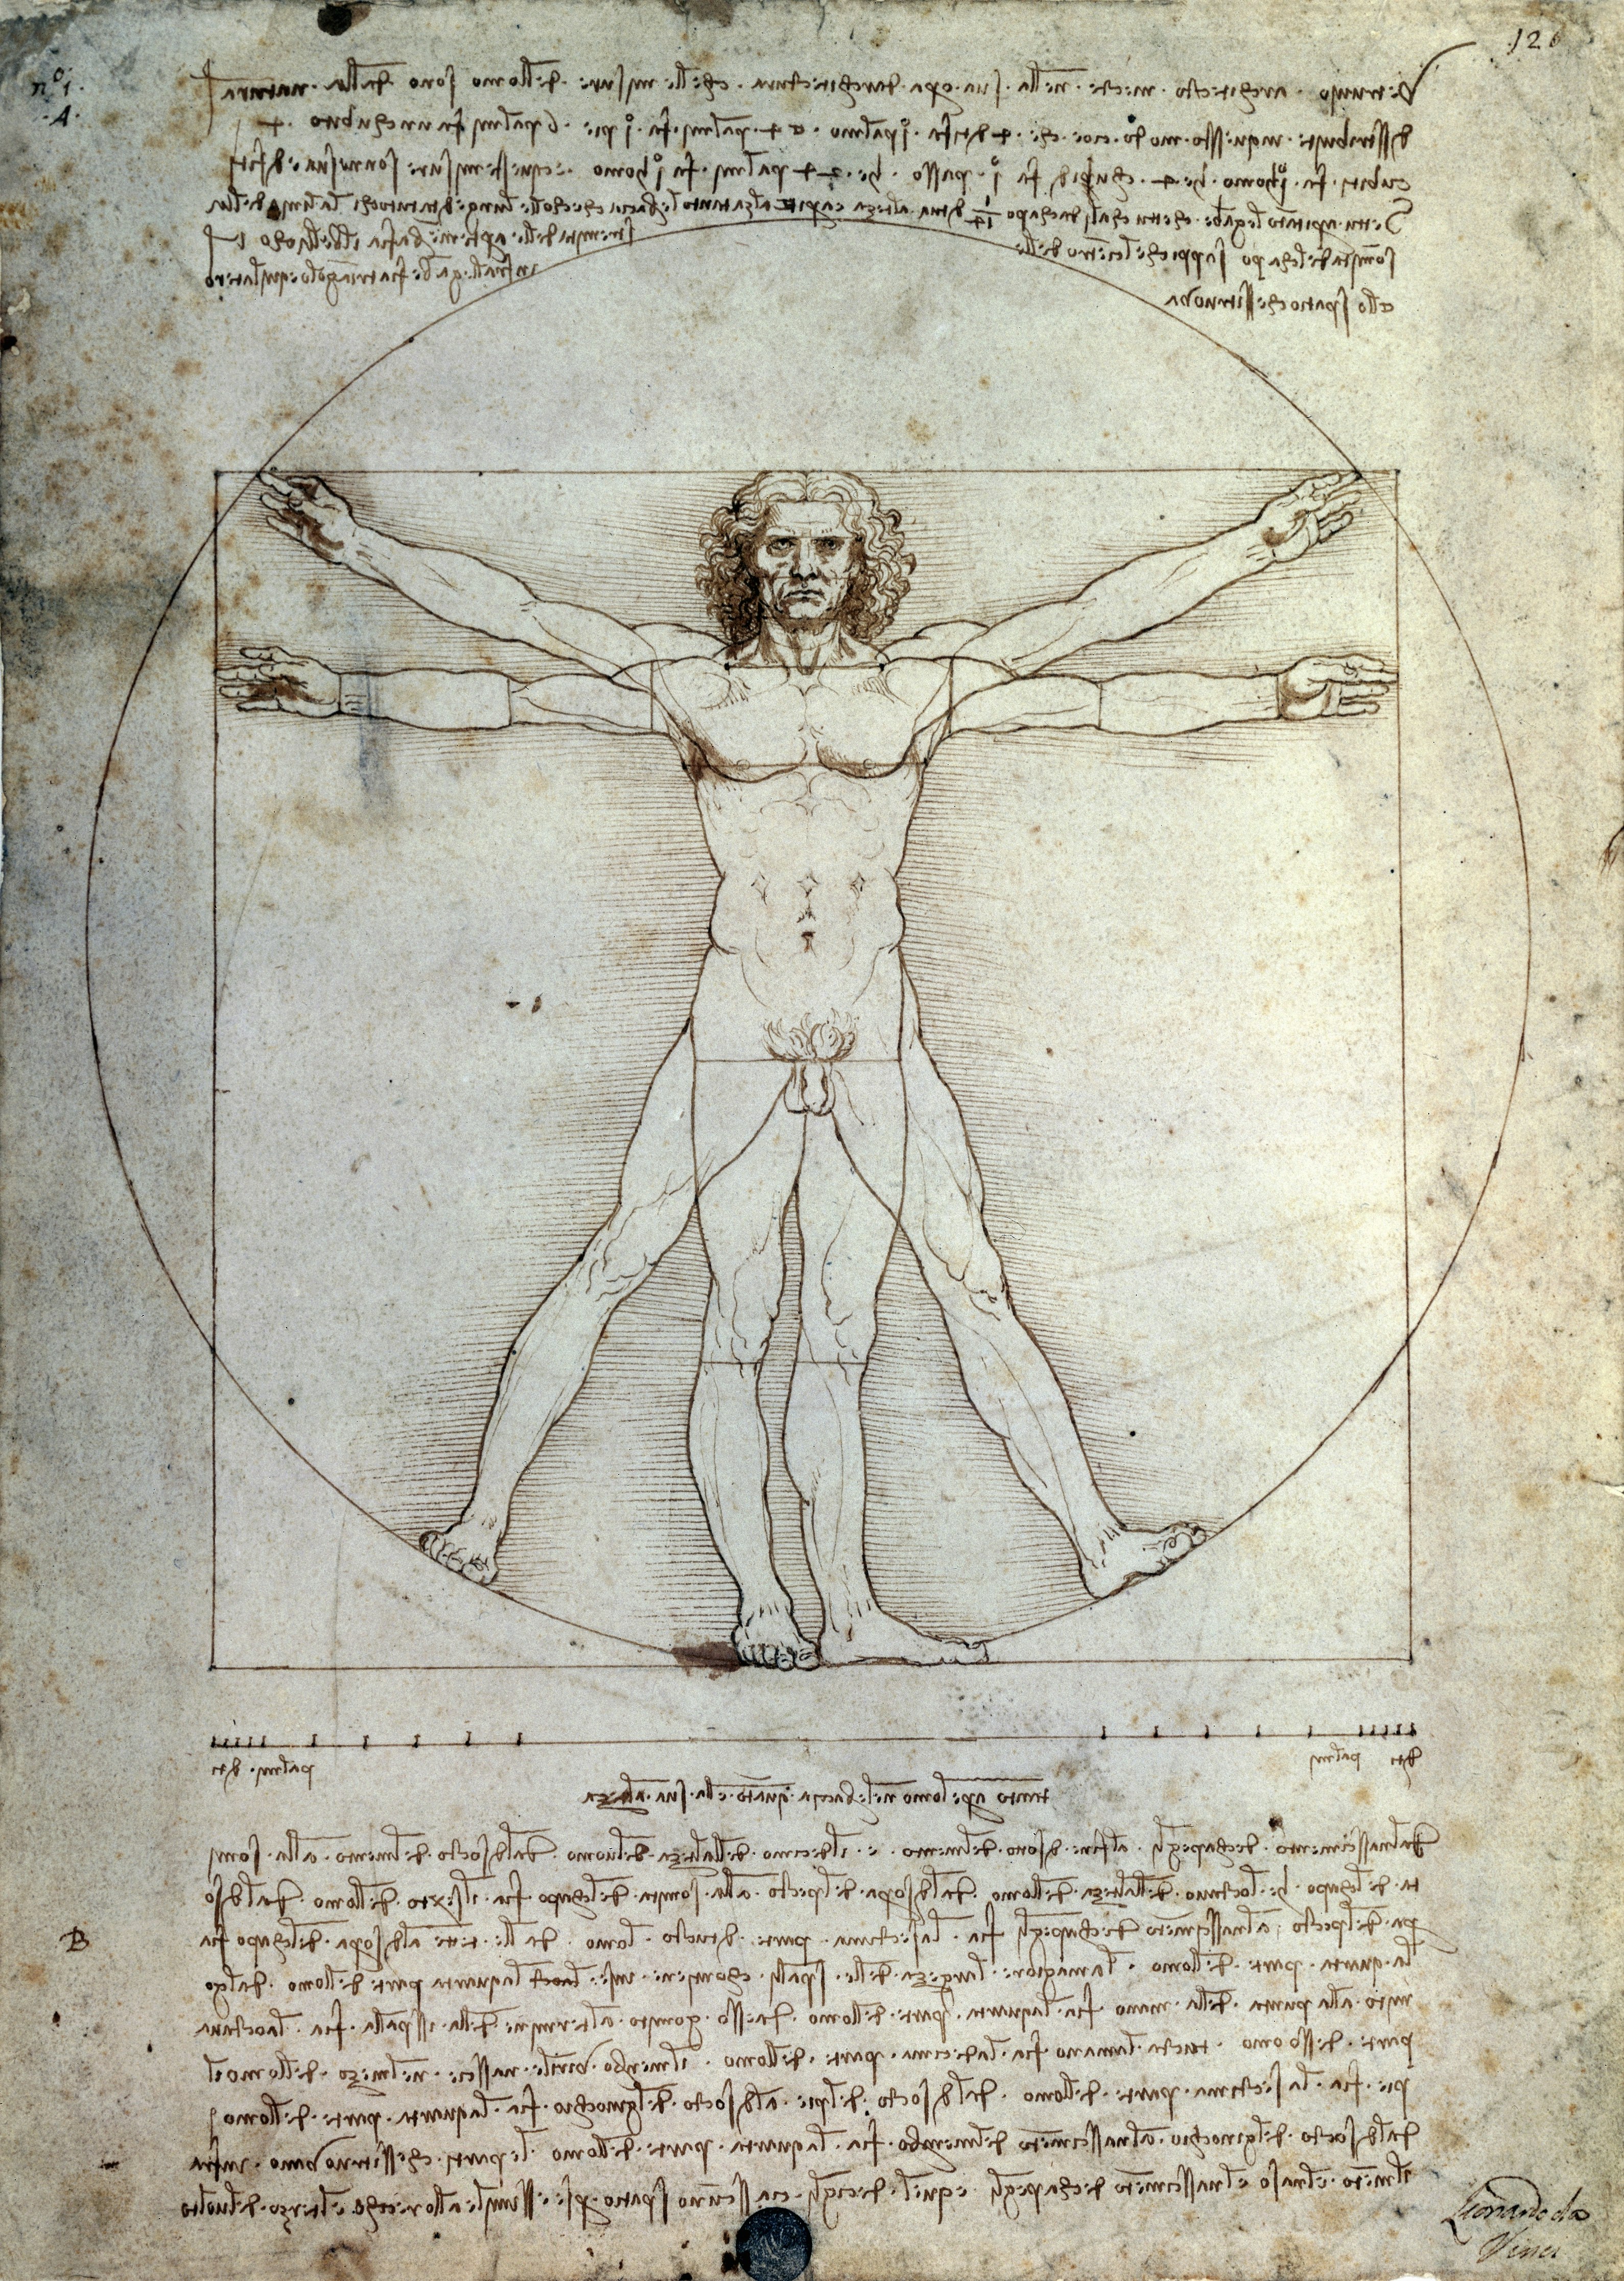 itruvian Man, 1490, by Leonardo da Vinci (1452-1519), pencil and ink on paper, 34x24cm